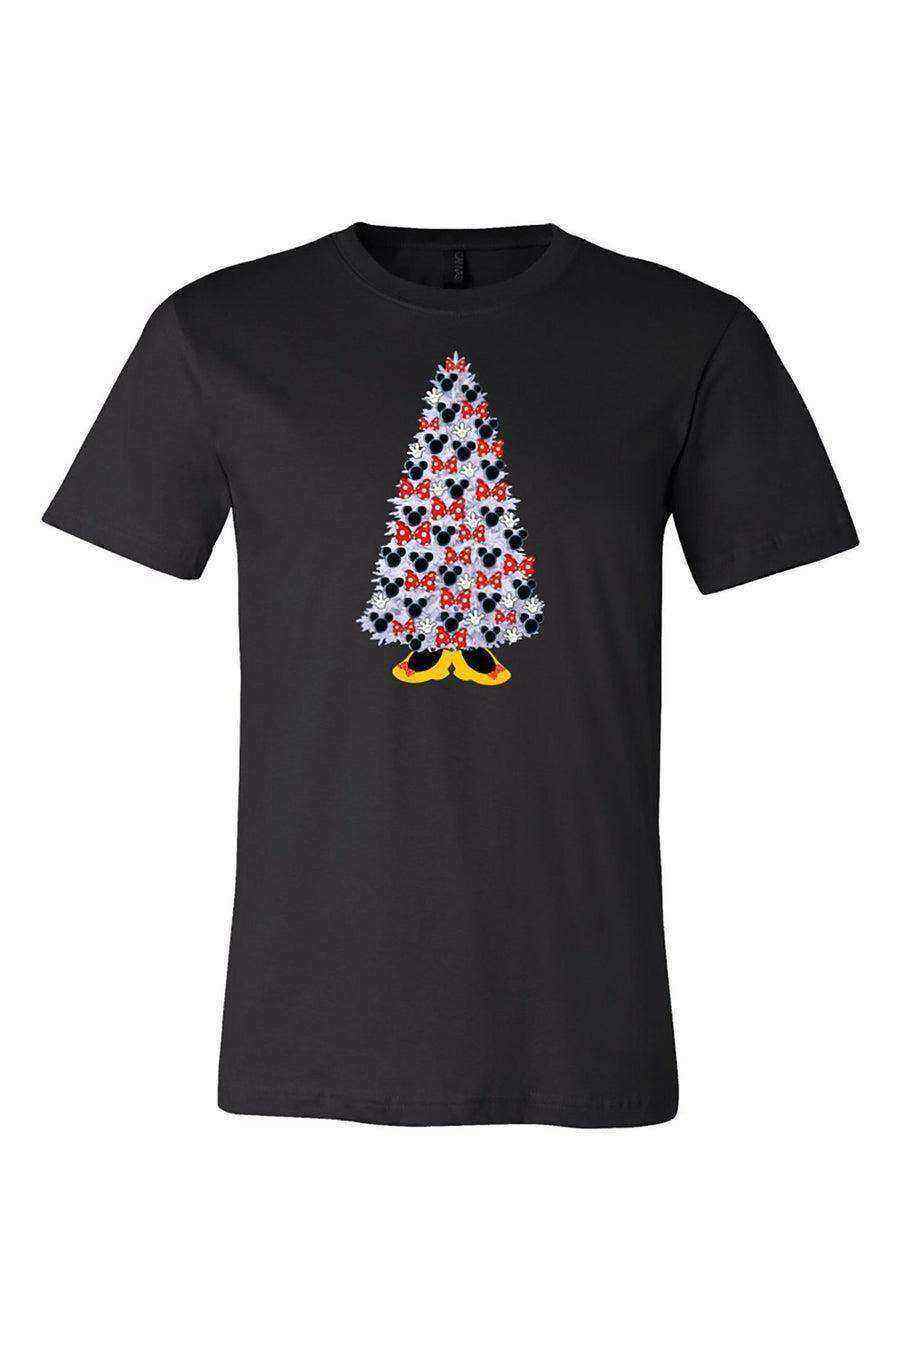 Minnie Christmas Tree Shirt - Dylan's Tees